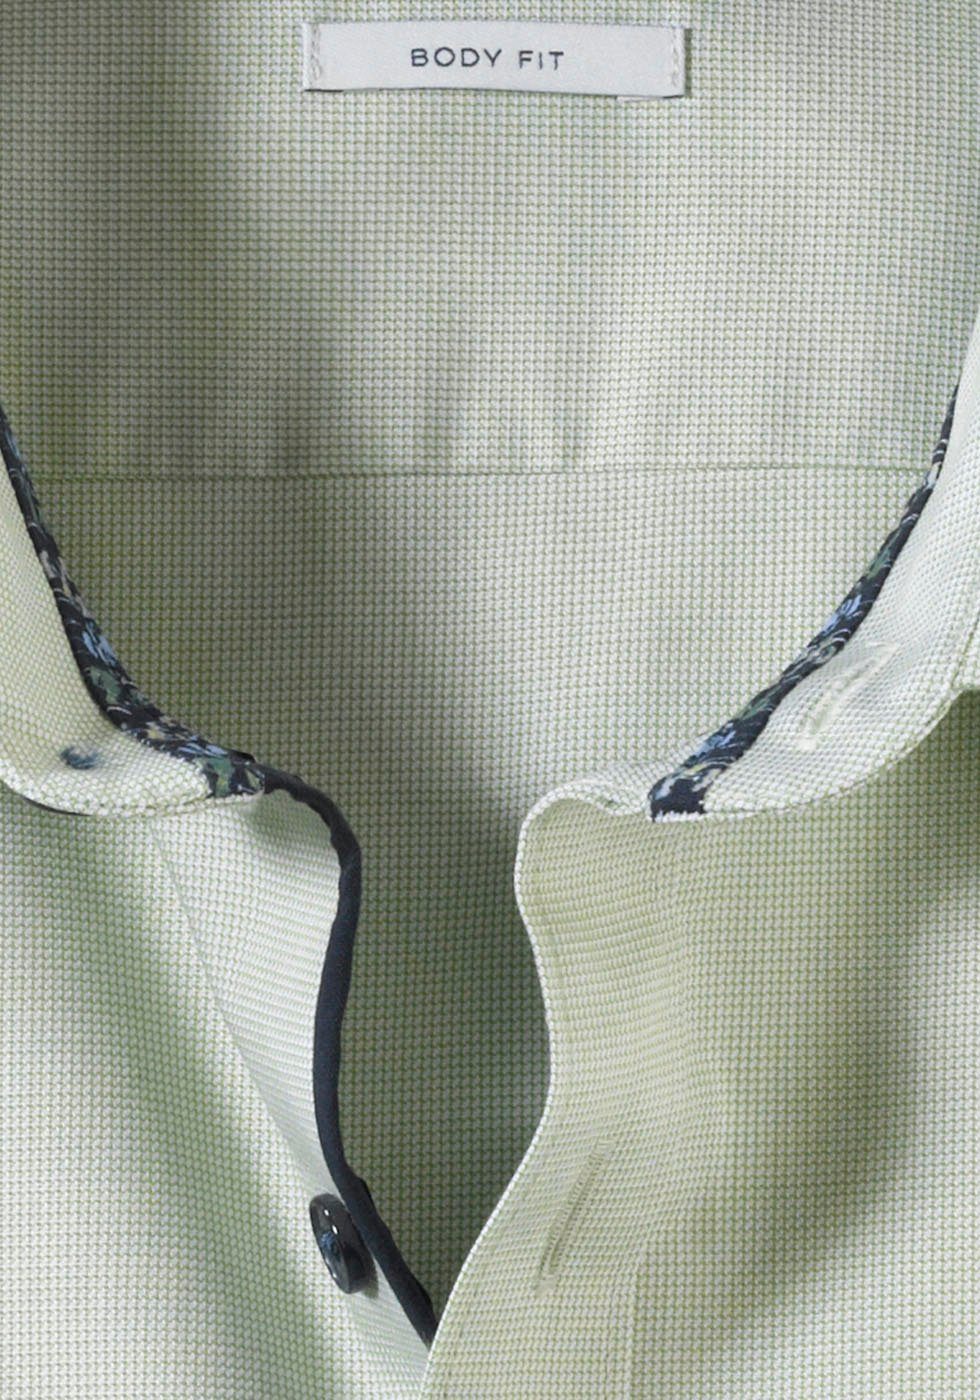 body fit OLYMP Five Logo-Stitching Level mit limone Businesshemd tonigem